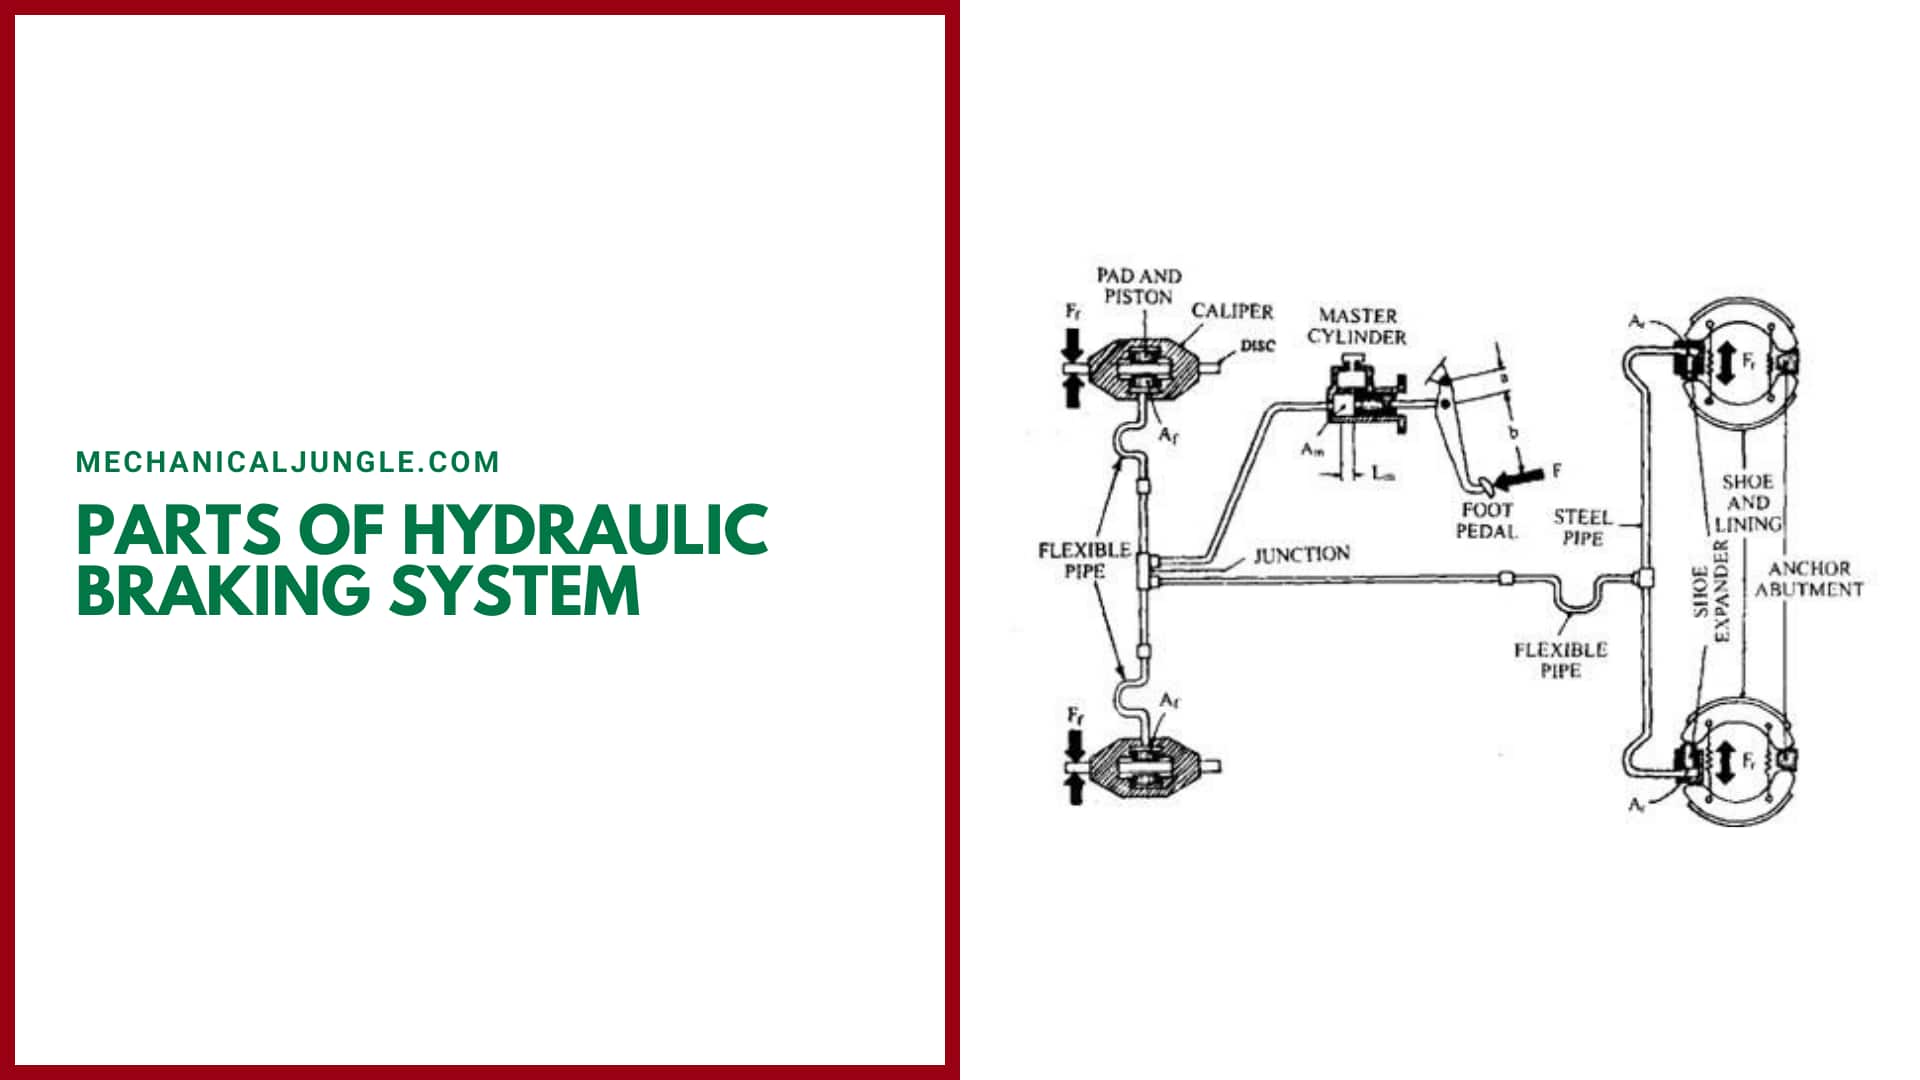 Parts of Hydraulic Braking System